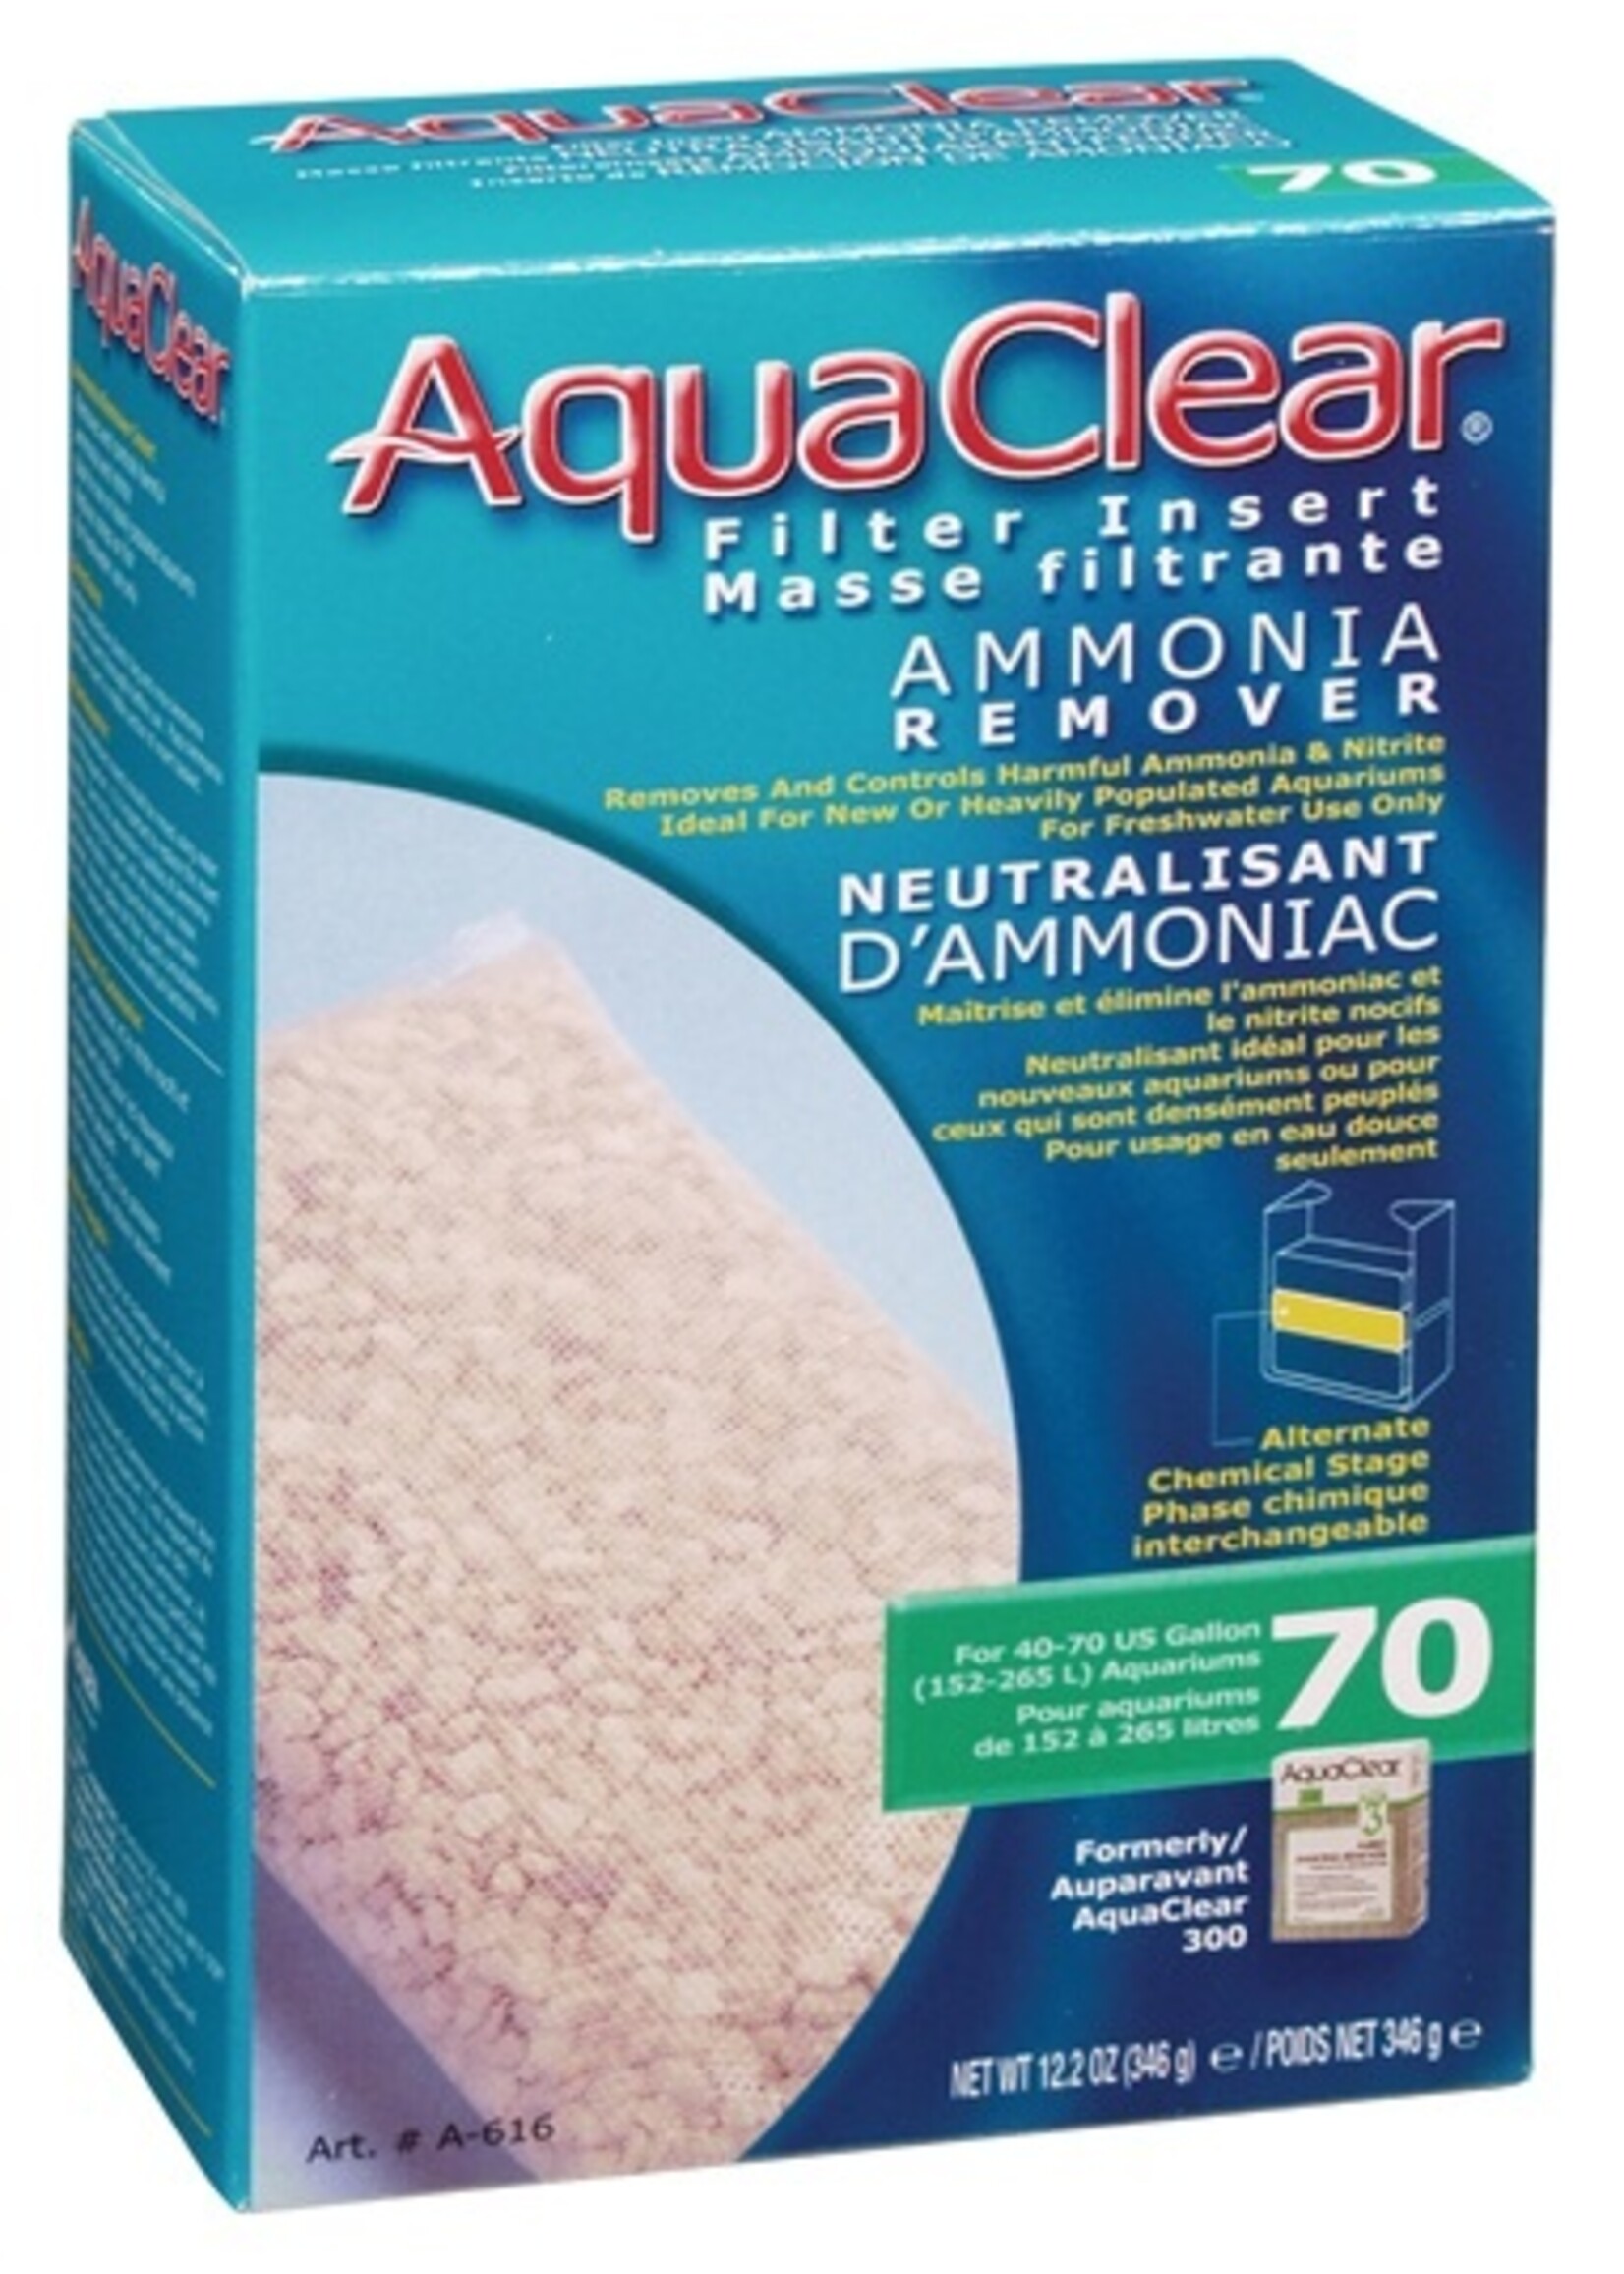 AquaClear AquaClear Ammonia Remover Filter Insert